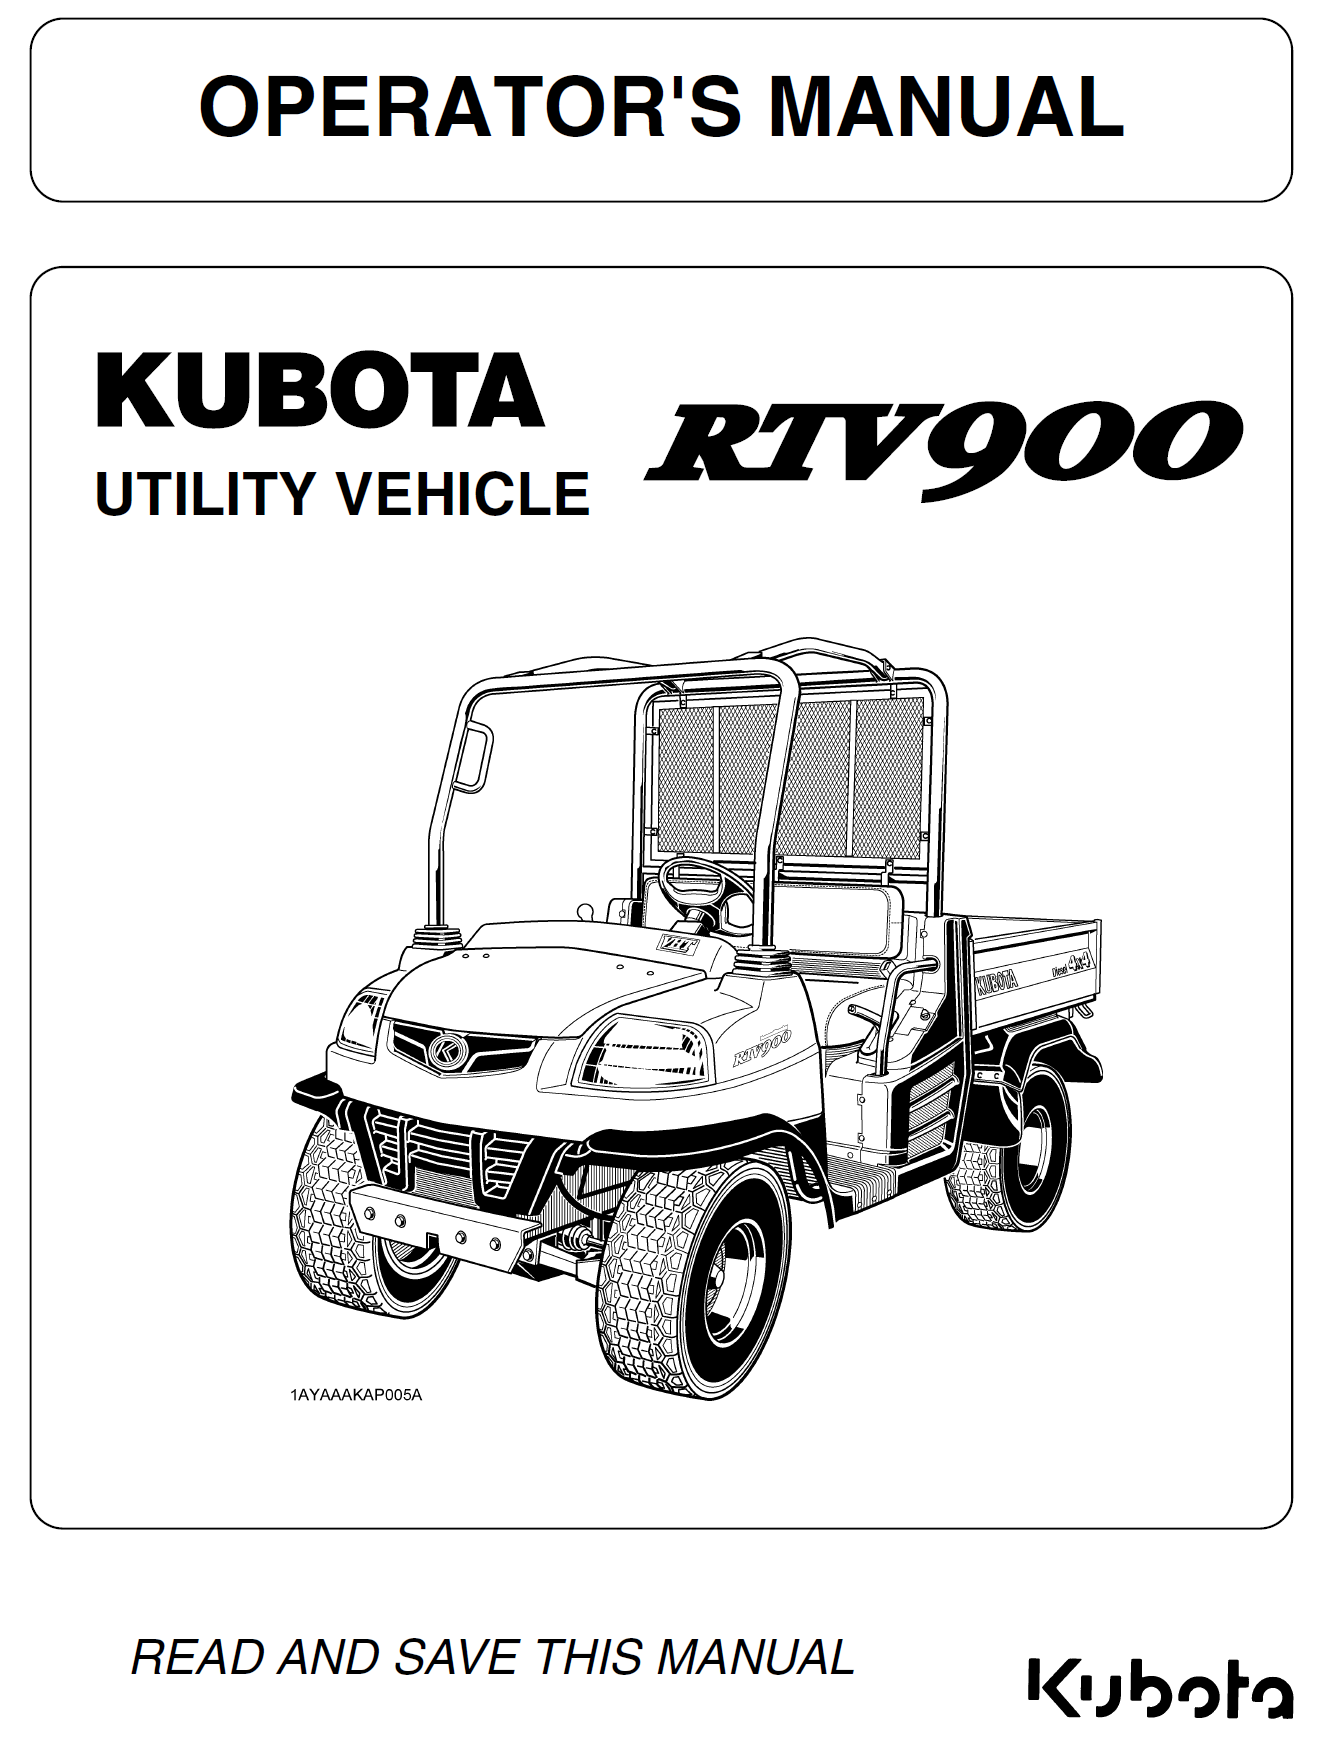 kubota tractor operators manuals pdf